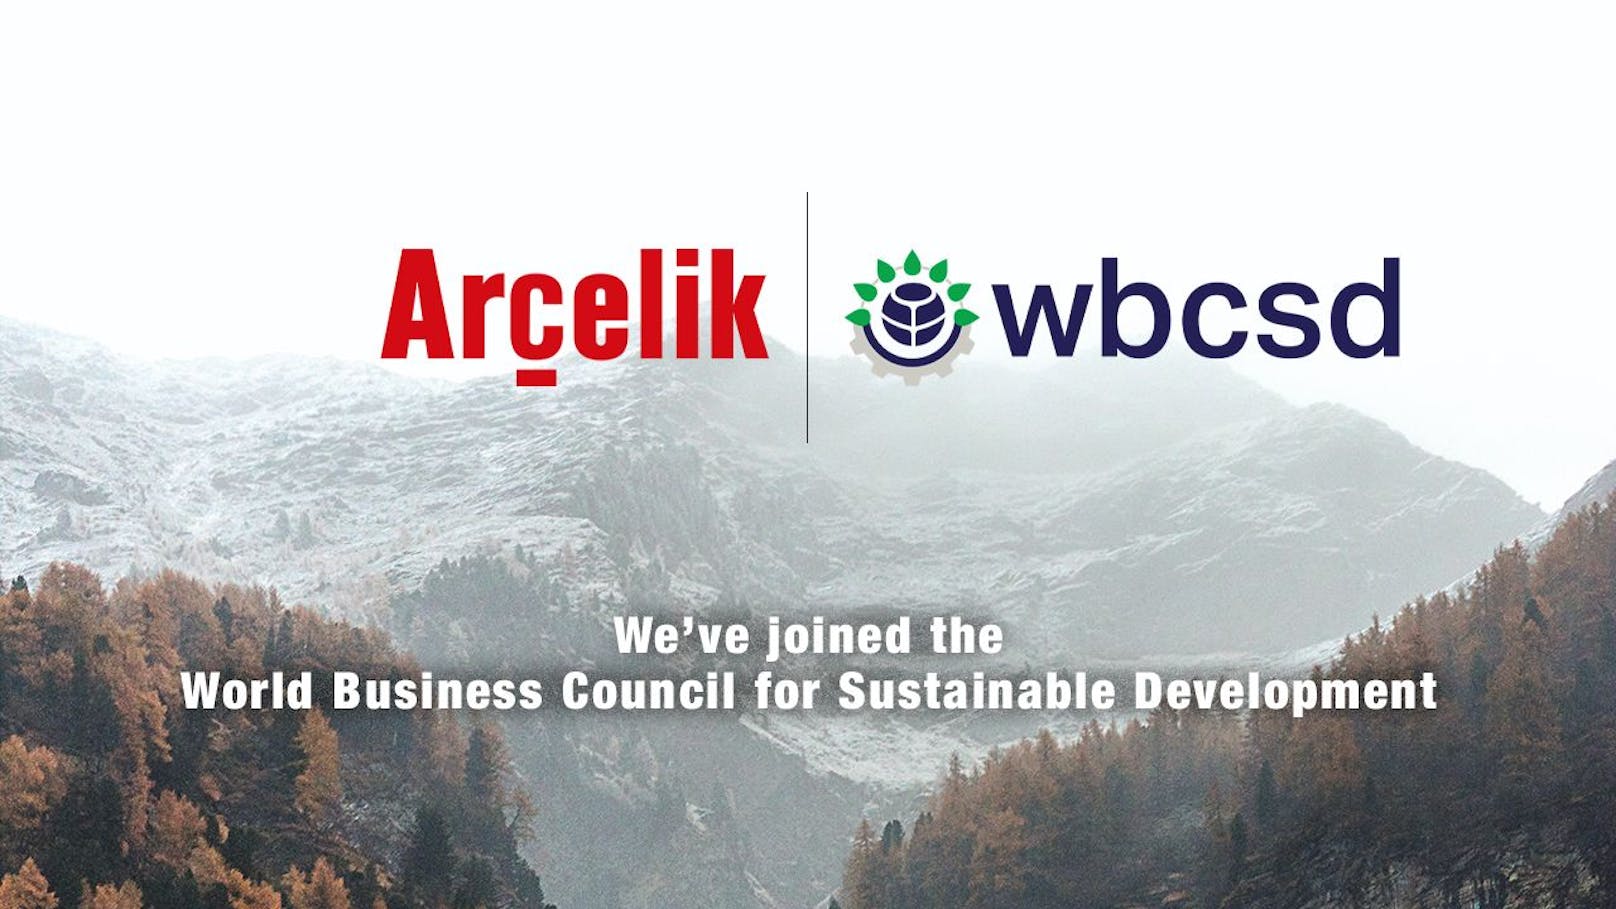 Arçelik tritt dem World Business Council for Sustainable Development bei.